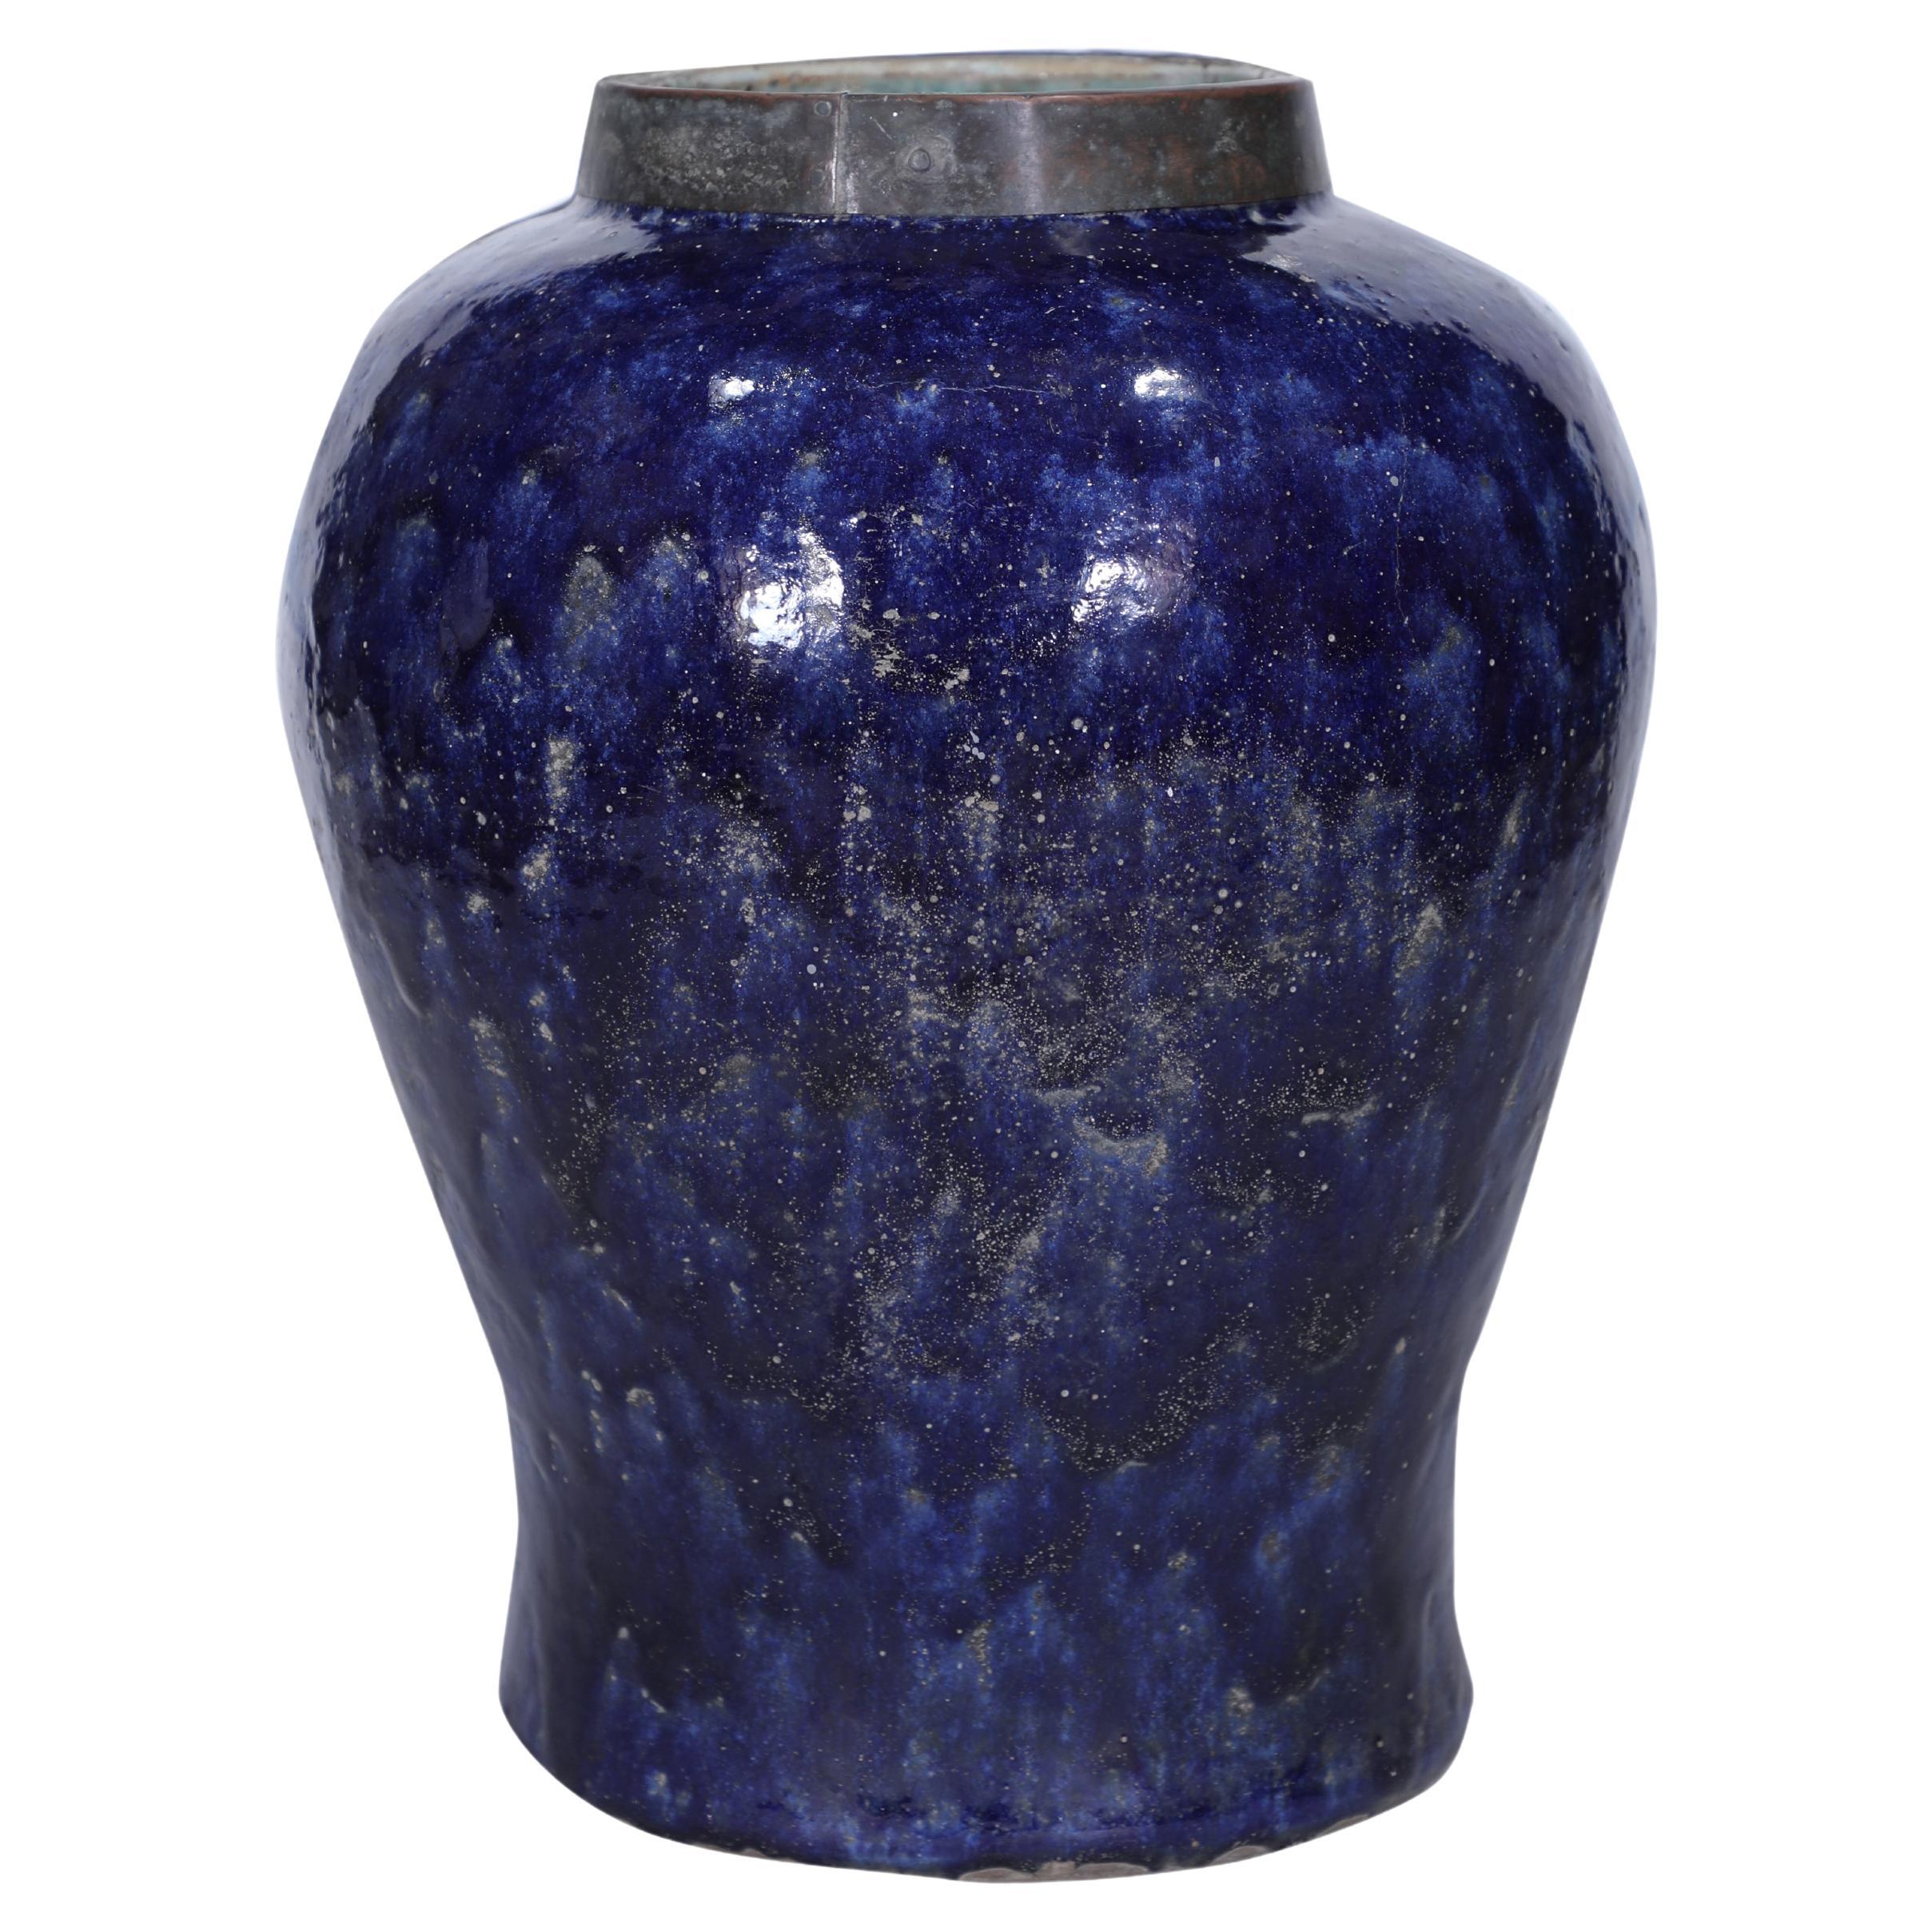 Große kobaltblaue Urne oder Pflanzgefäß aus Keramik